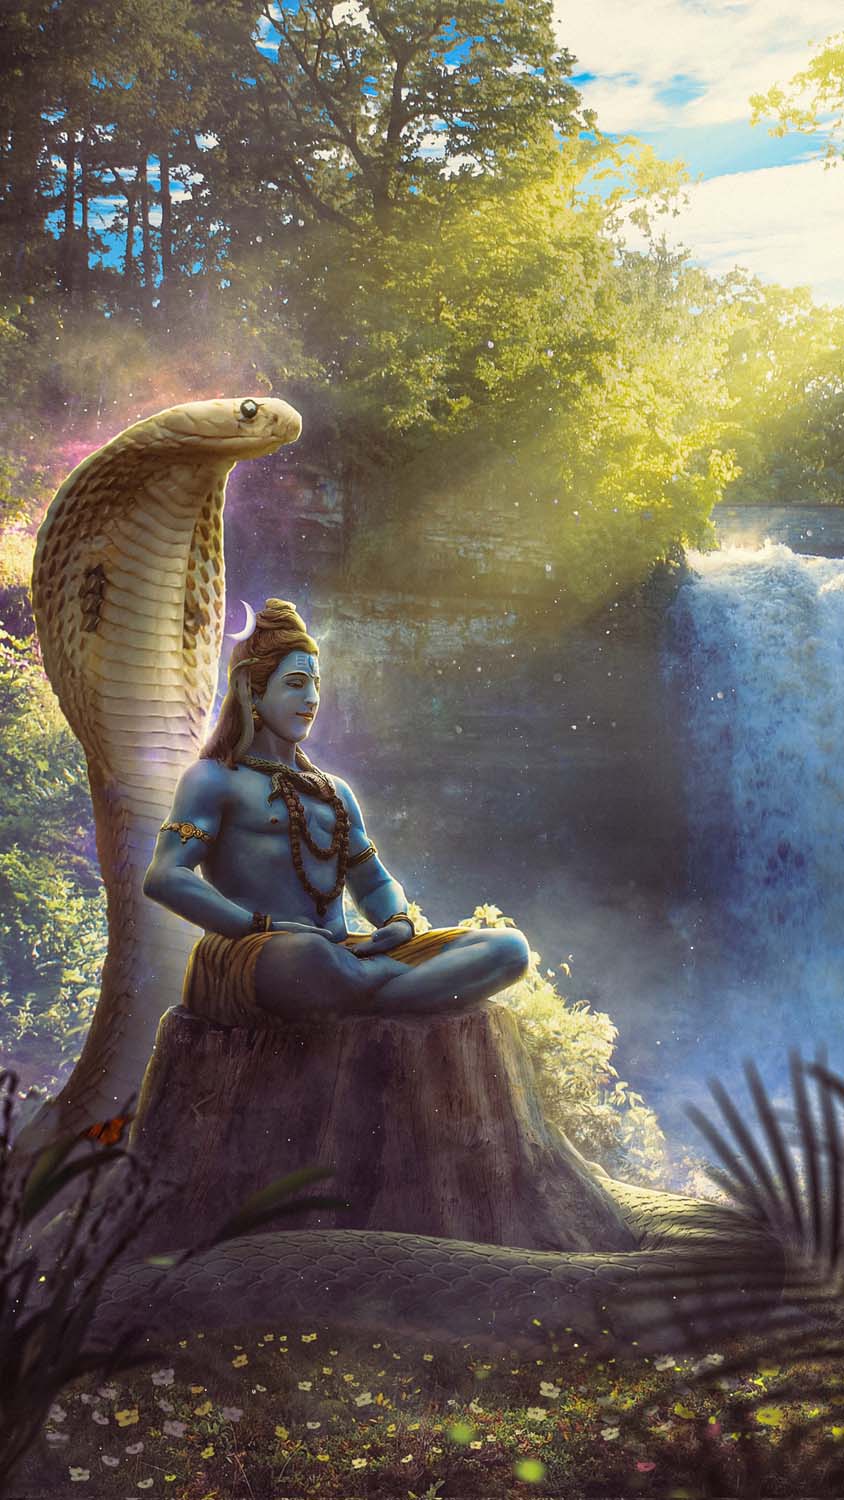 God Shiva Meditation IPhone Wallpaper HD - IPhone Wallpapers ...